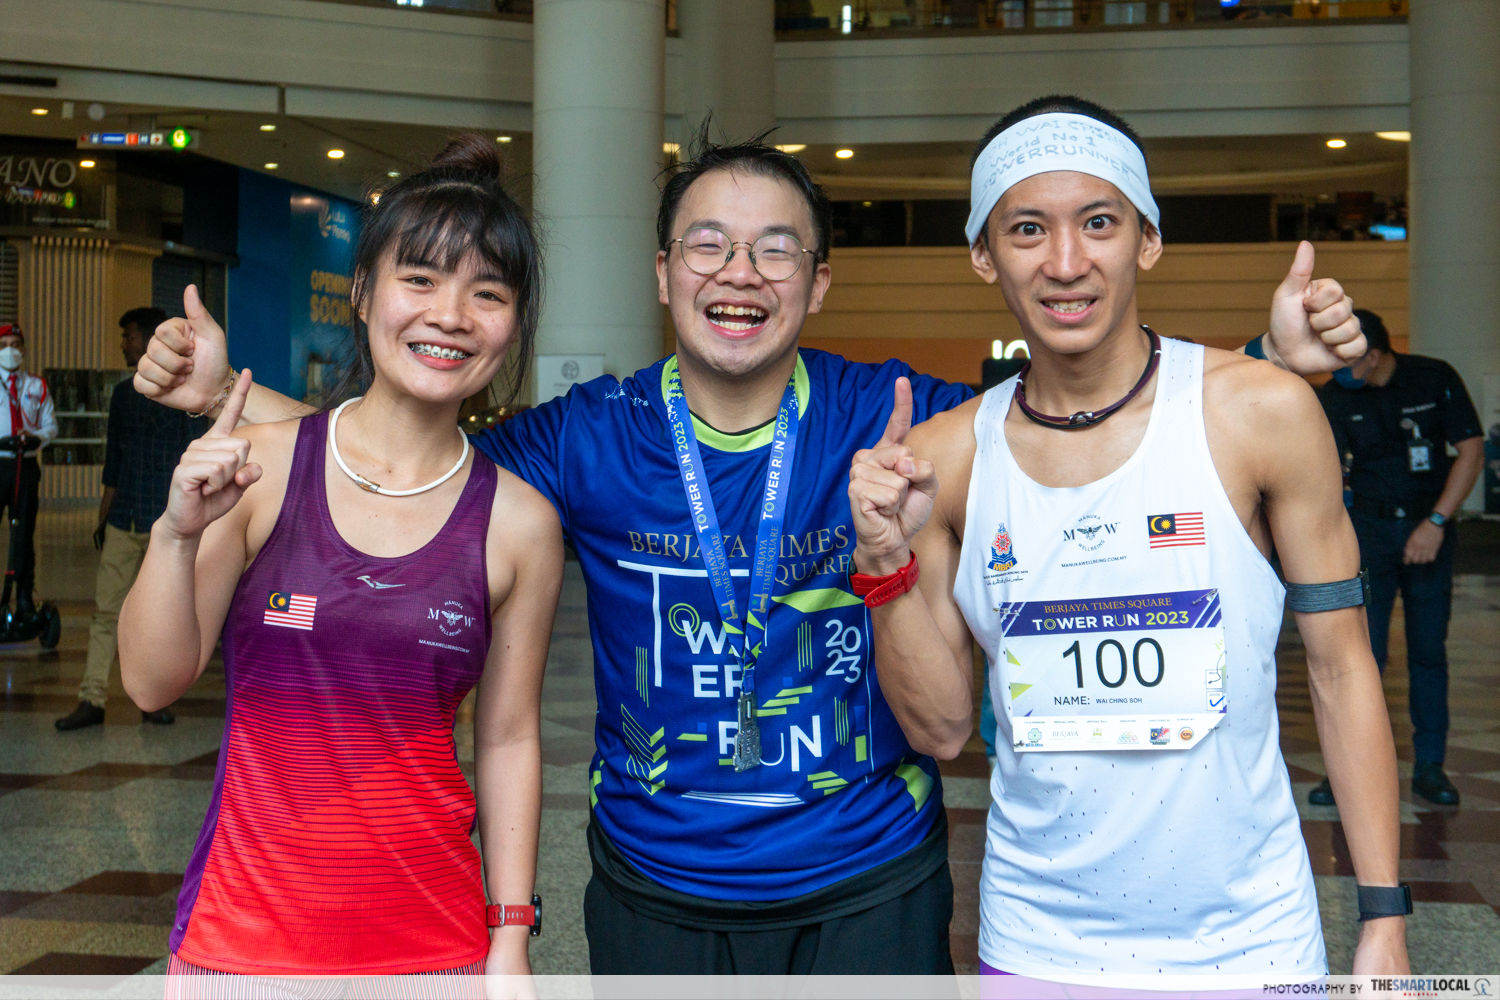 Tower run finisher - with Soh Wai Ching and Jennifer Yee Chin